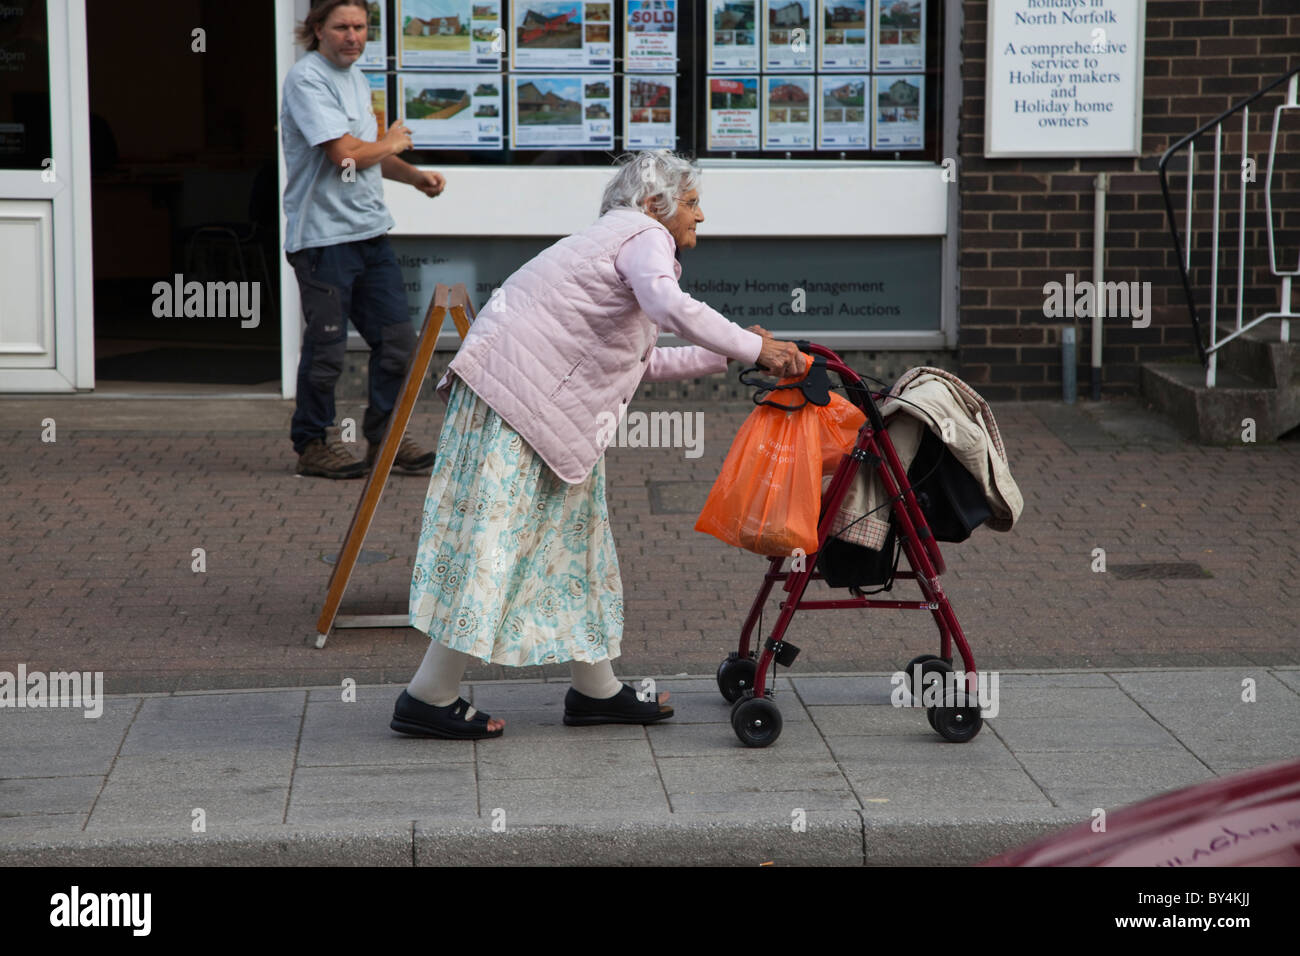 old-lady-pushing-a-four-wheel-zimmer-walking-frame-in-sheringham-norfolk-BY4KJJ.jpg